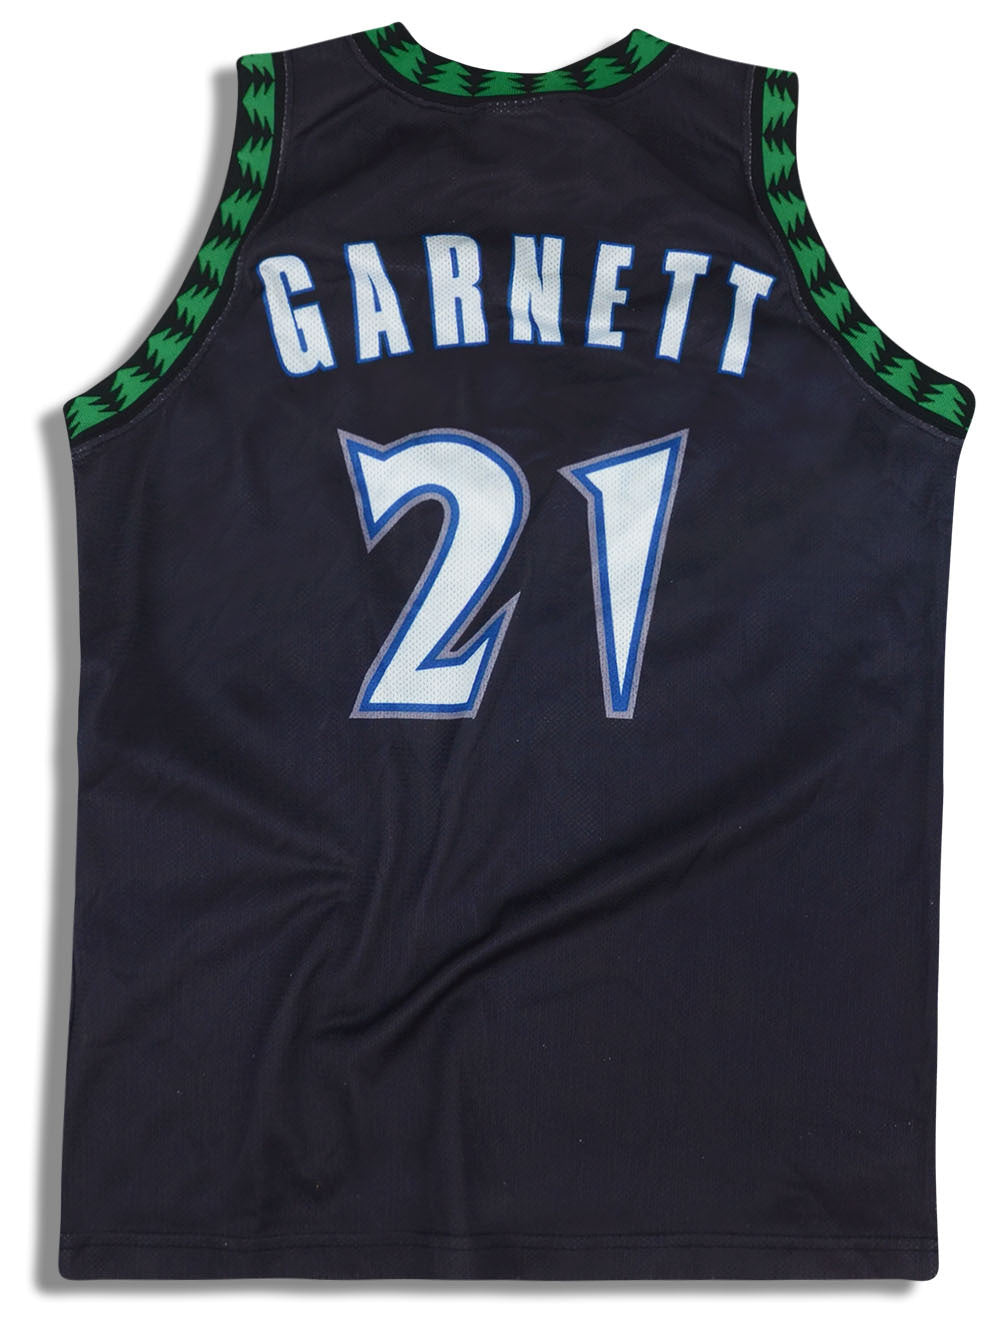 Kevin Garnett is back in the #21 Timberwolves jersey : r/nba